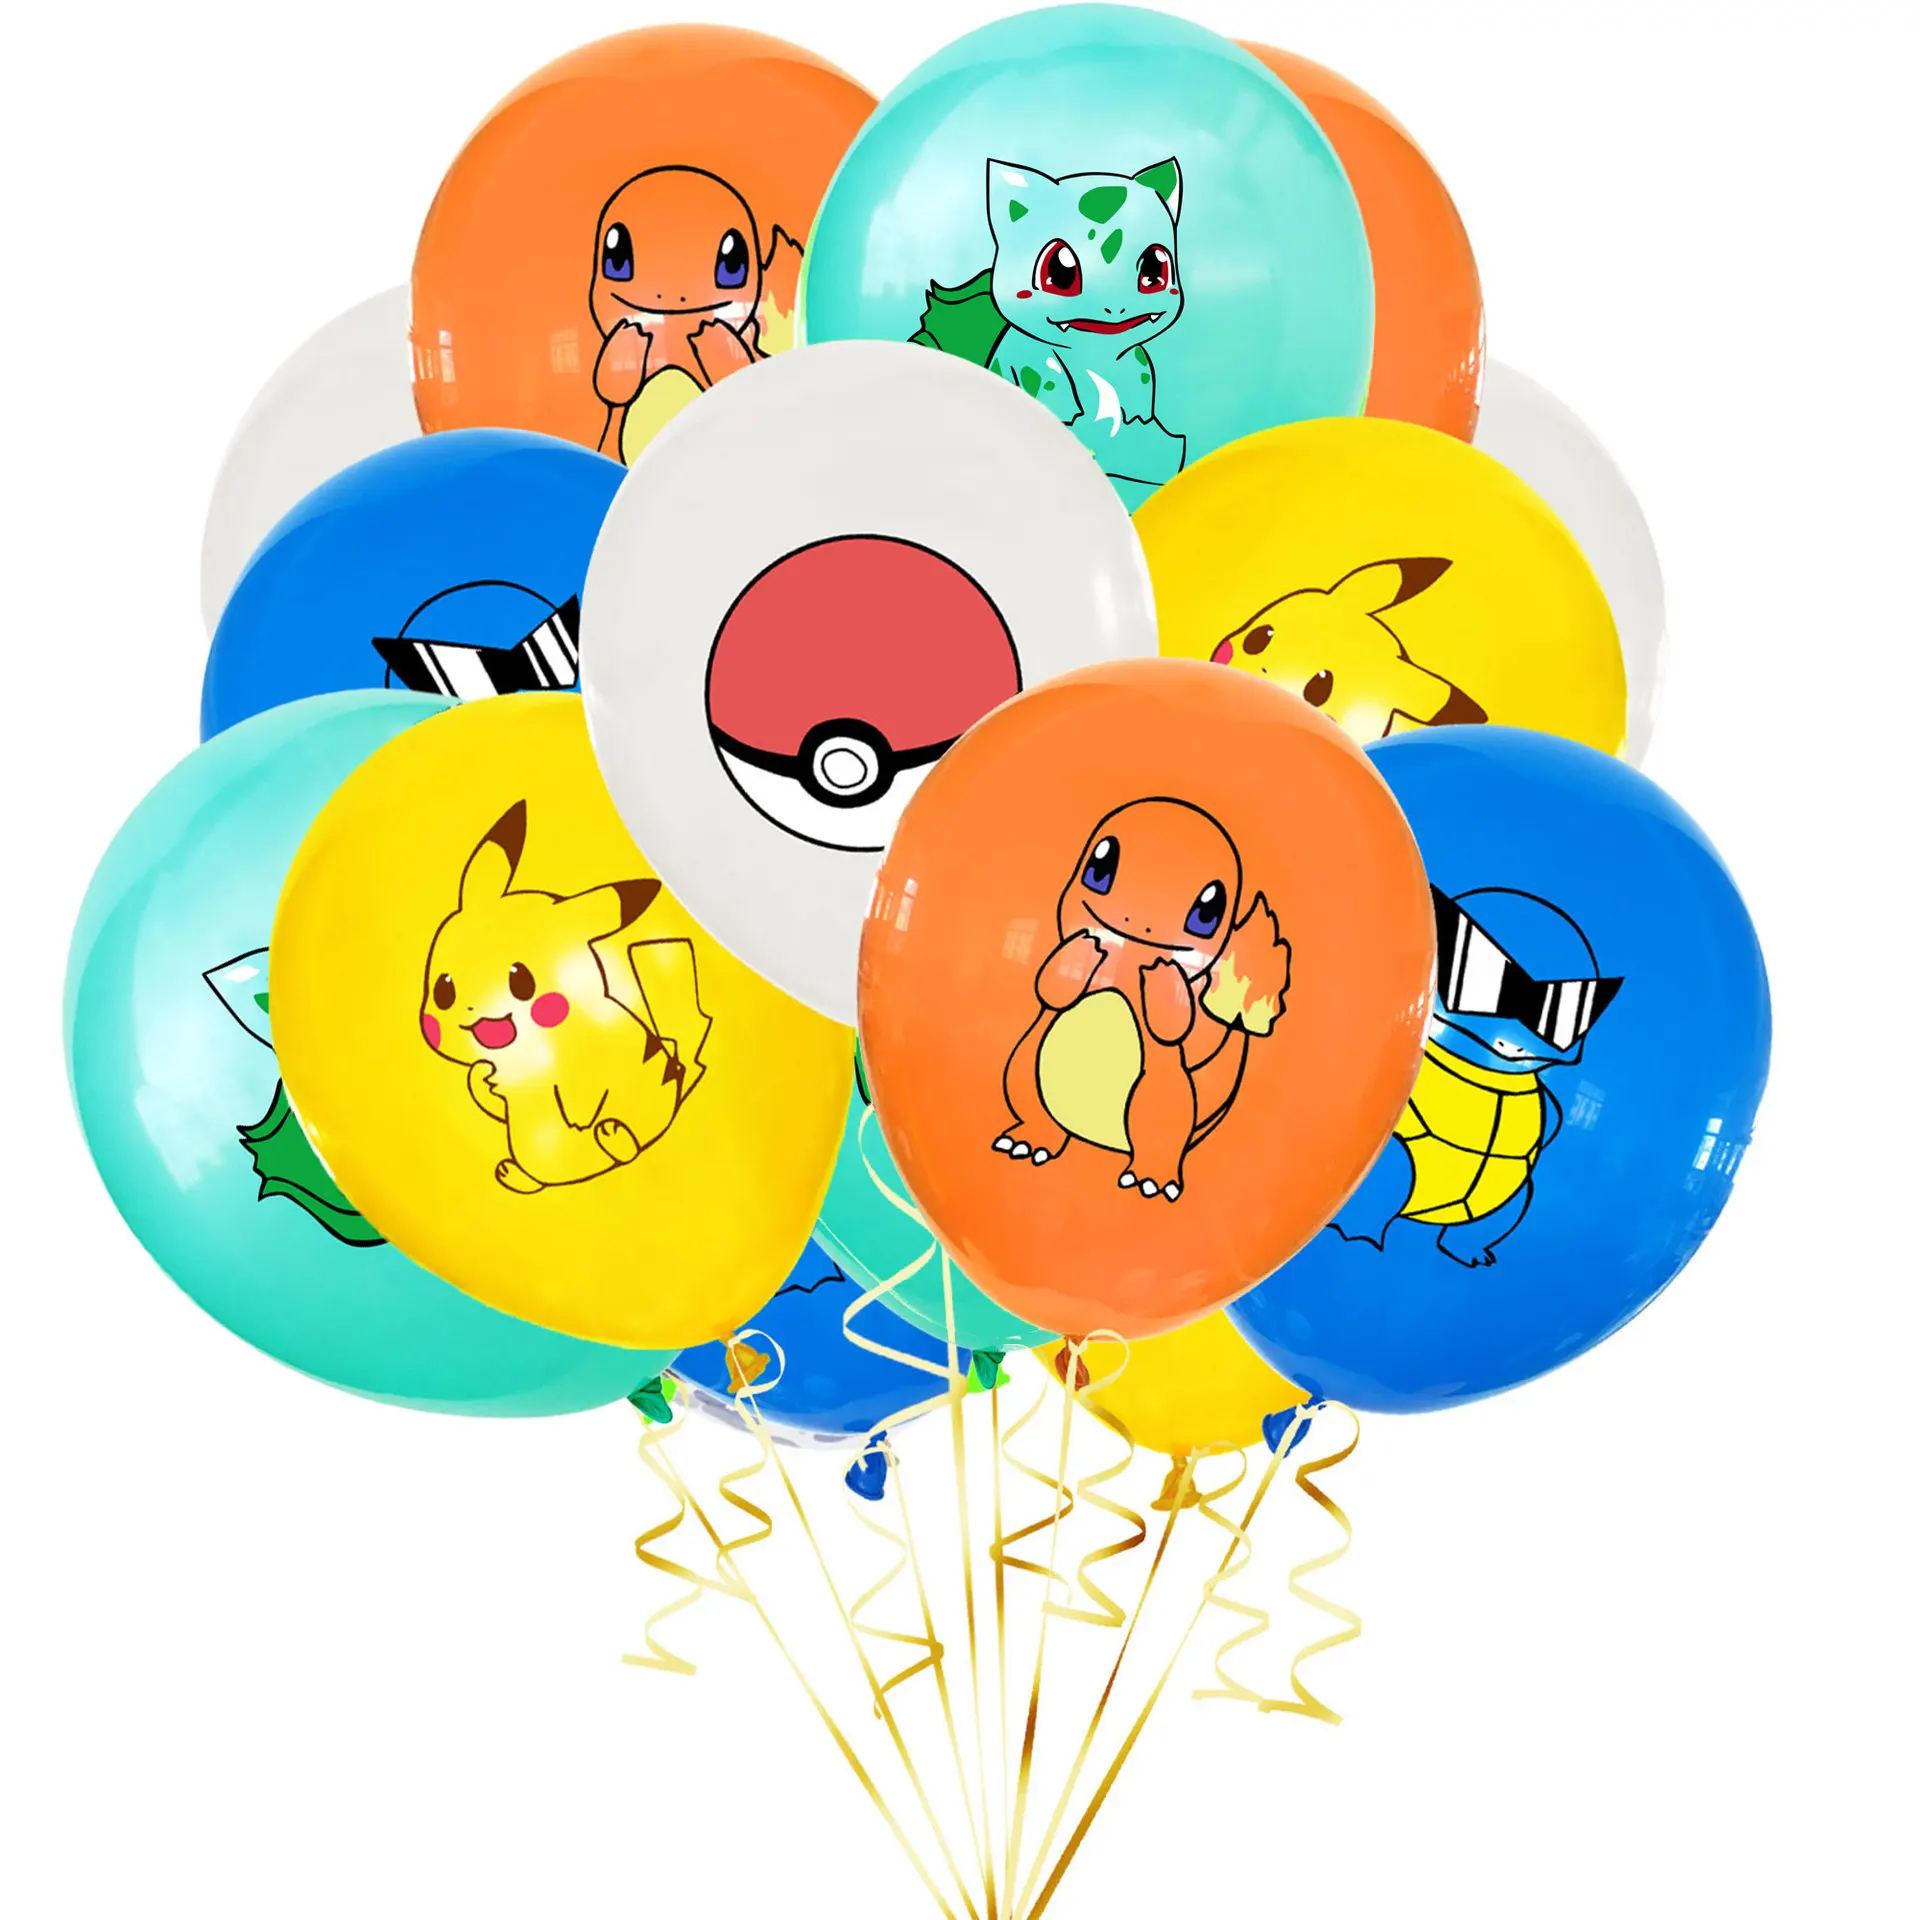 

10 Pcs Children's Birthday Party Decoration Balloons Pokemon Theme Pikachu Little Fire Dragon Jenny Turtle Cartoon Latex Balloon